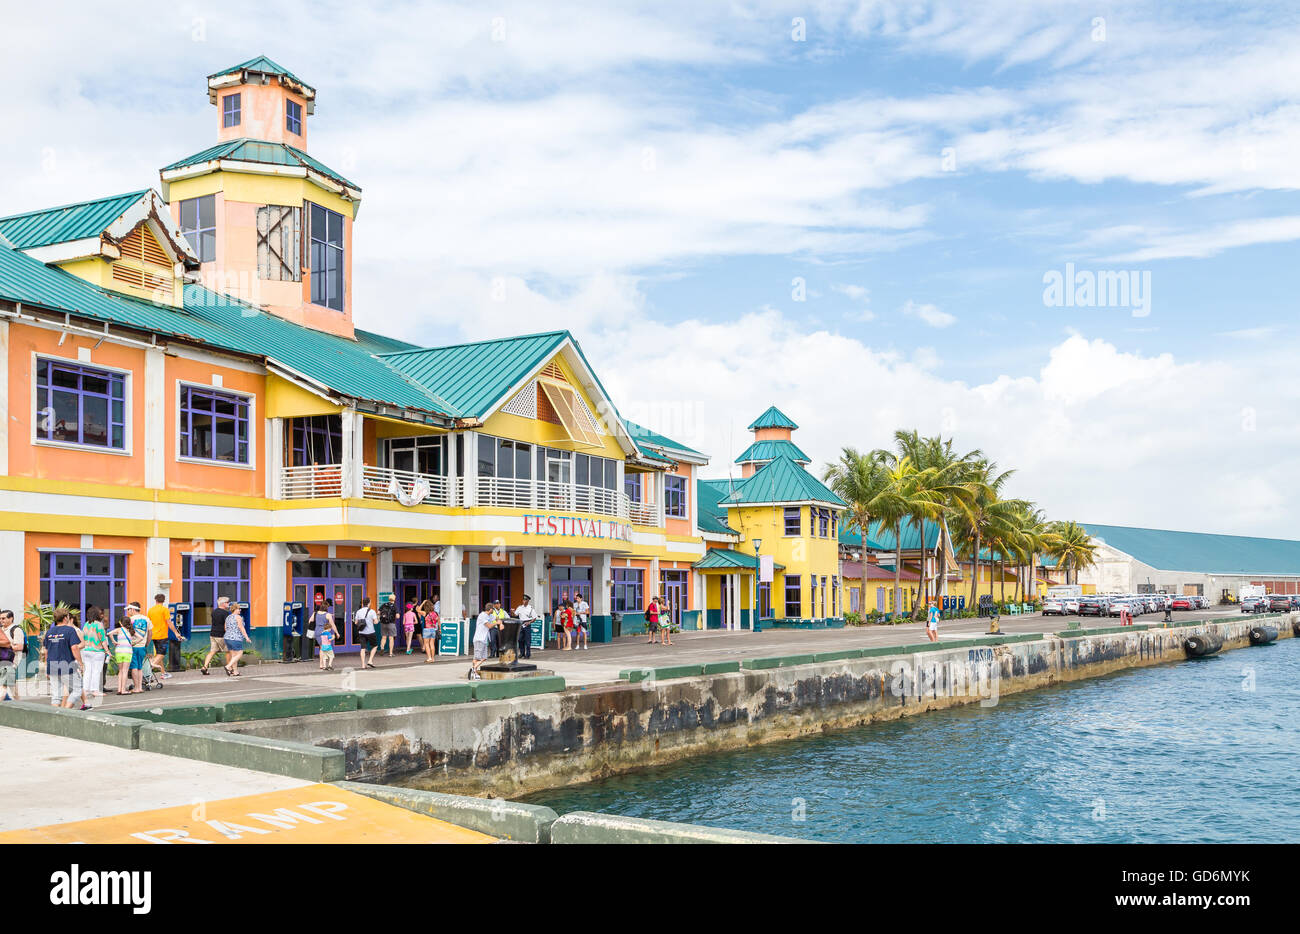 Festival Place in Nassau Bahamas Stock Photo